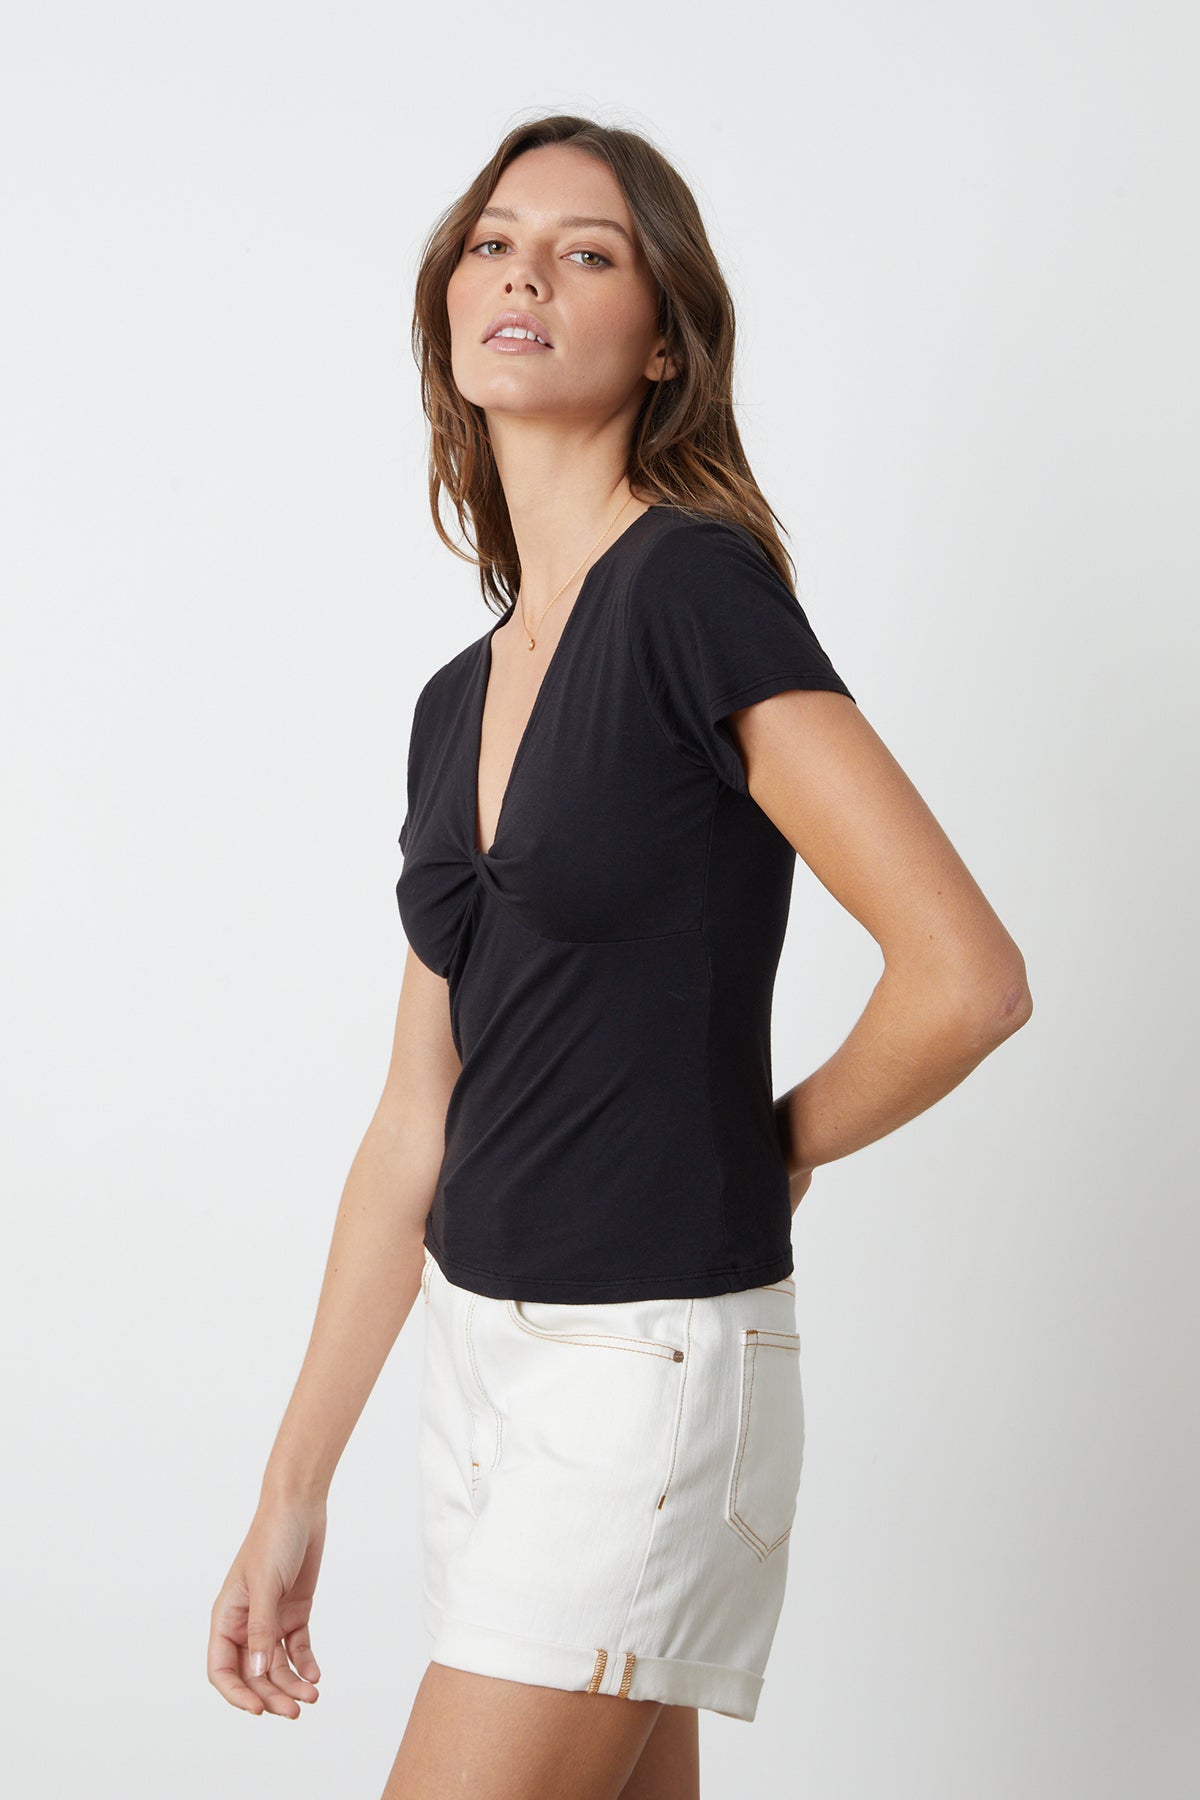 A model wearing a t-shirt and Velvet by Graham & Spencer Natalie Rolled Hem Shorts.-26484786823361